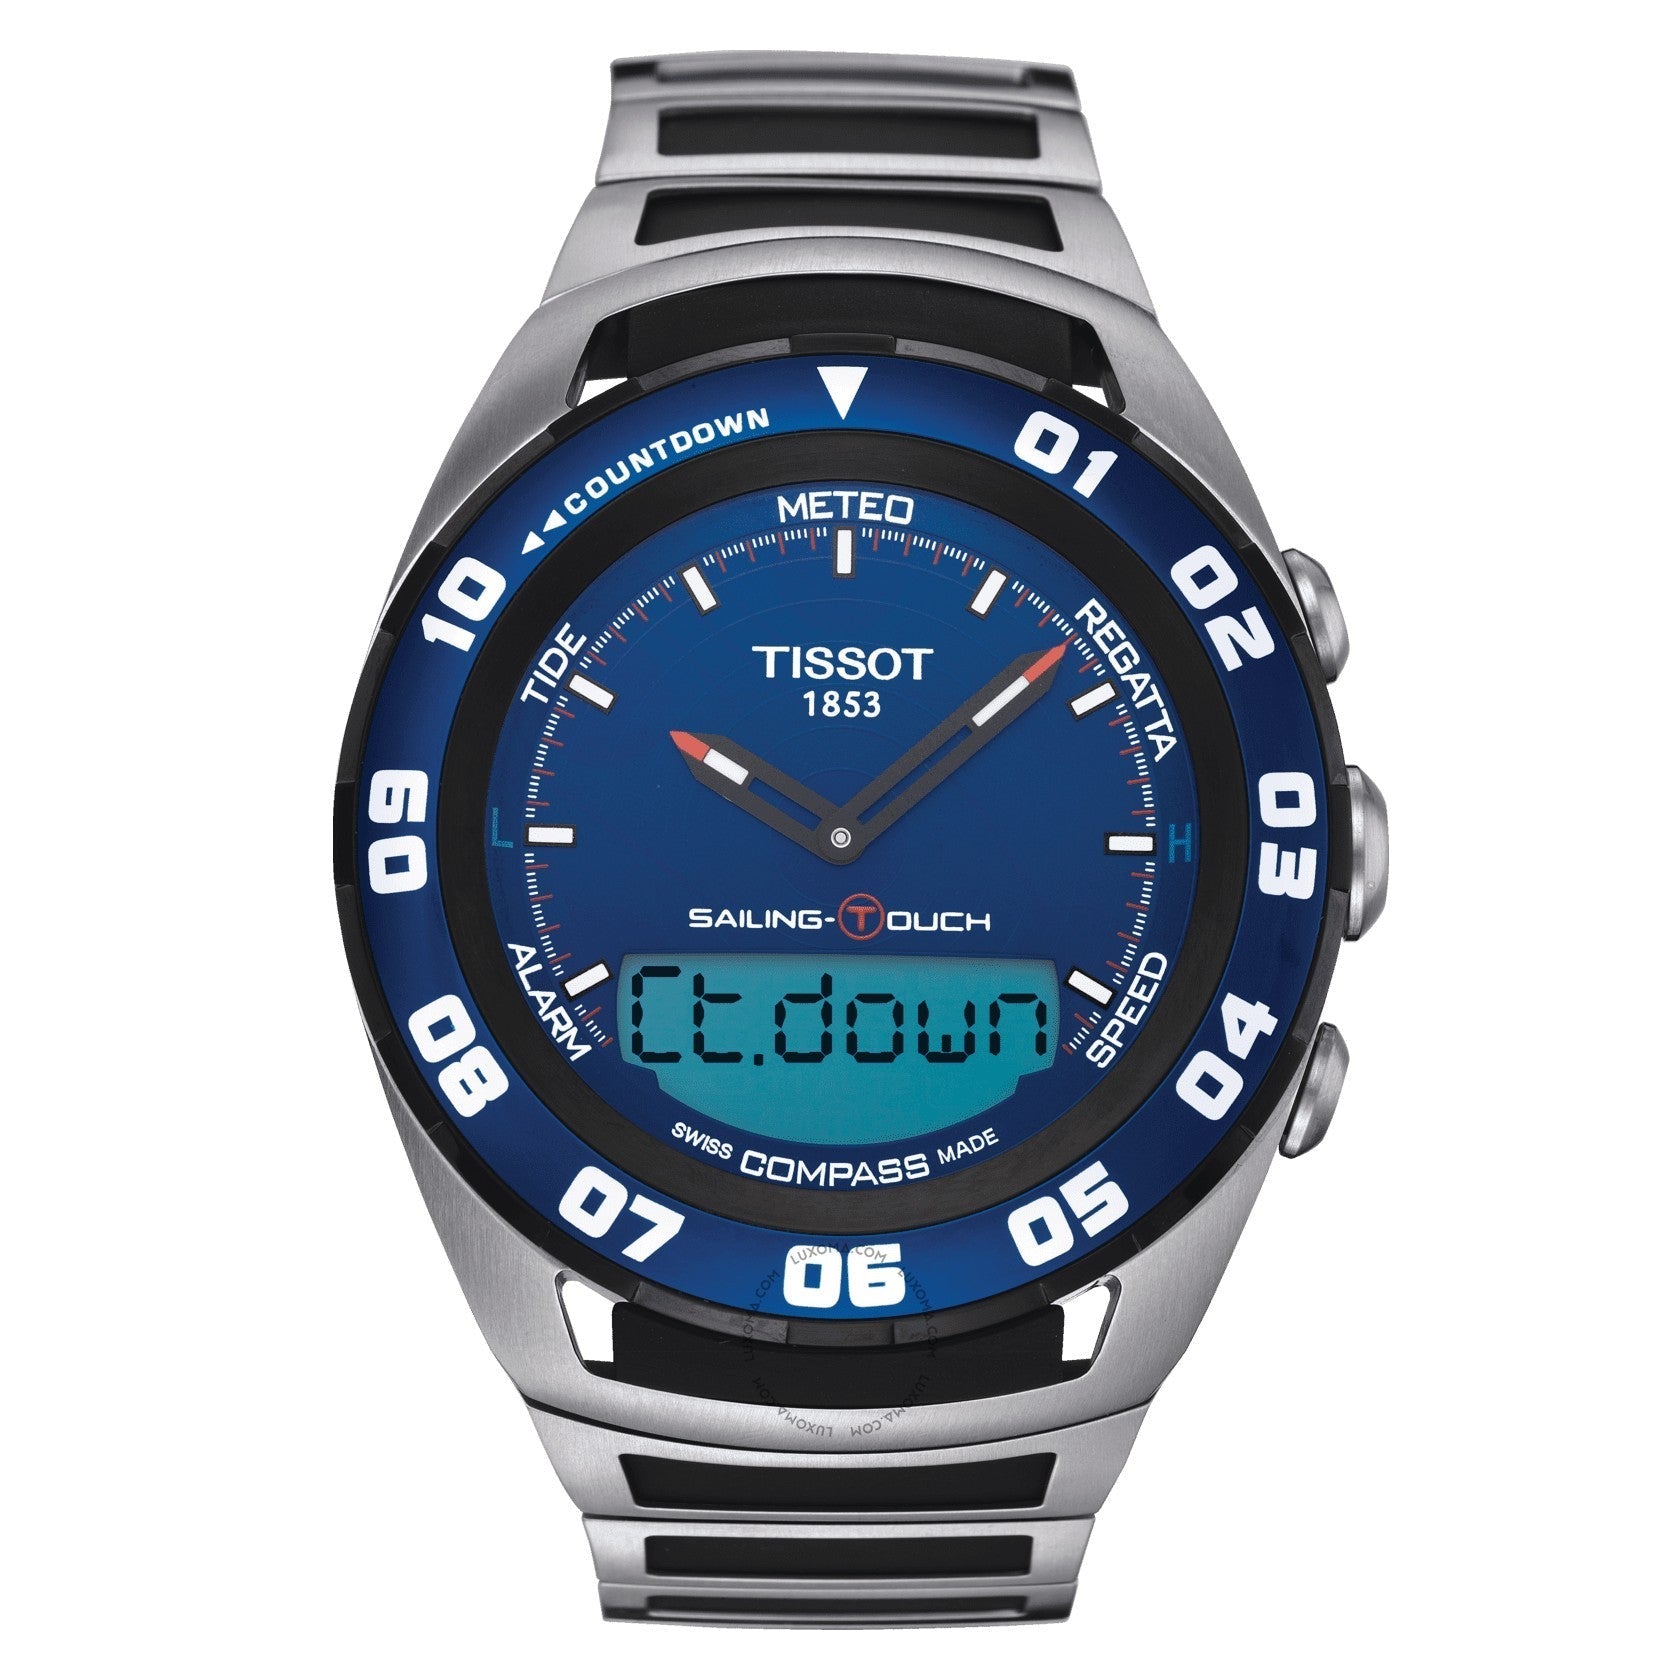 Tissot Sailing Touch Chronograph Blue Dial Men's Watch T056.420.21.041.00